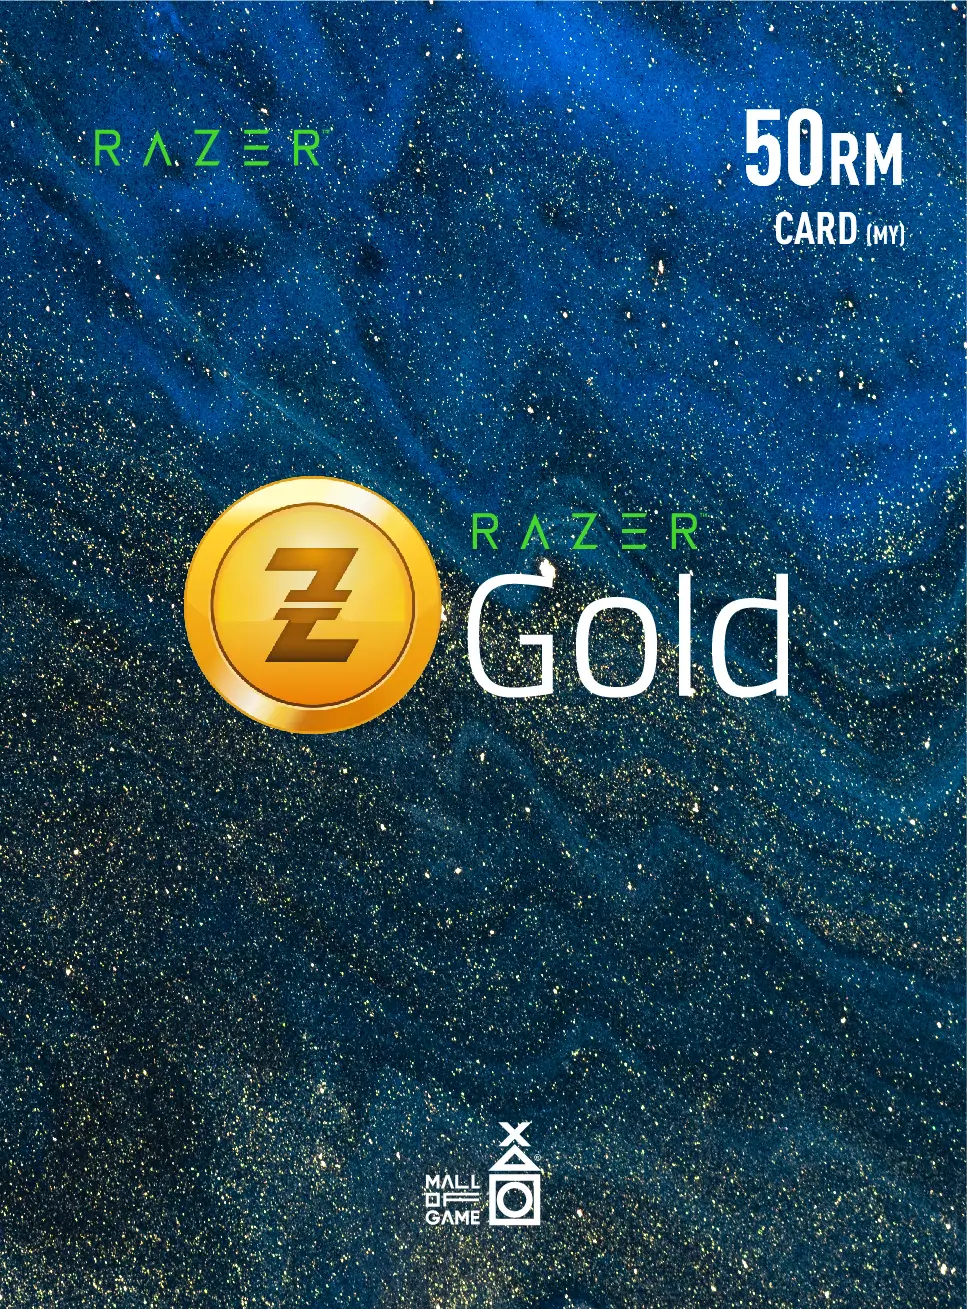 Razer Gold RM50 (MY)